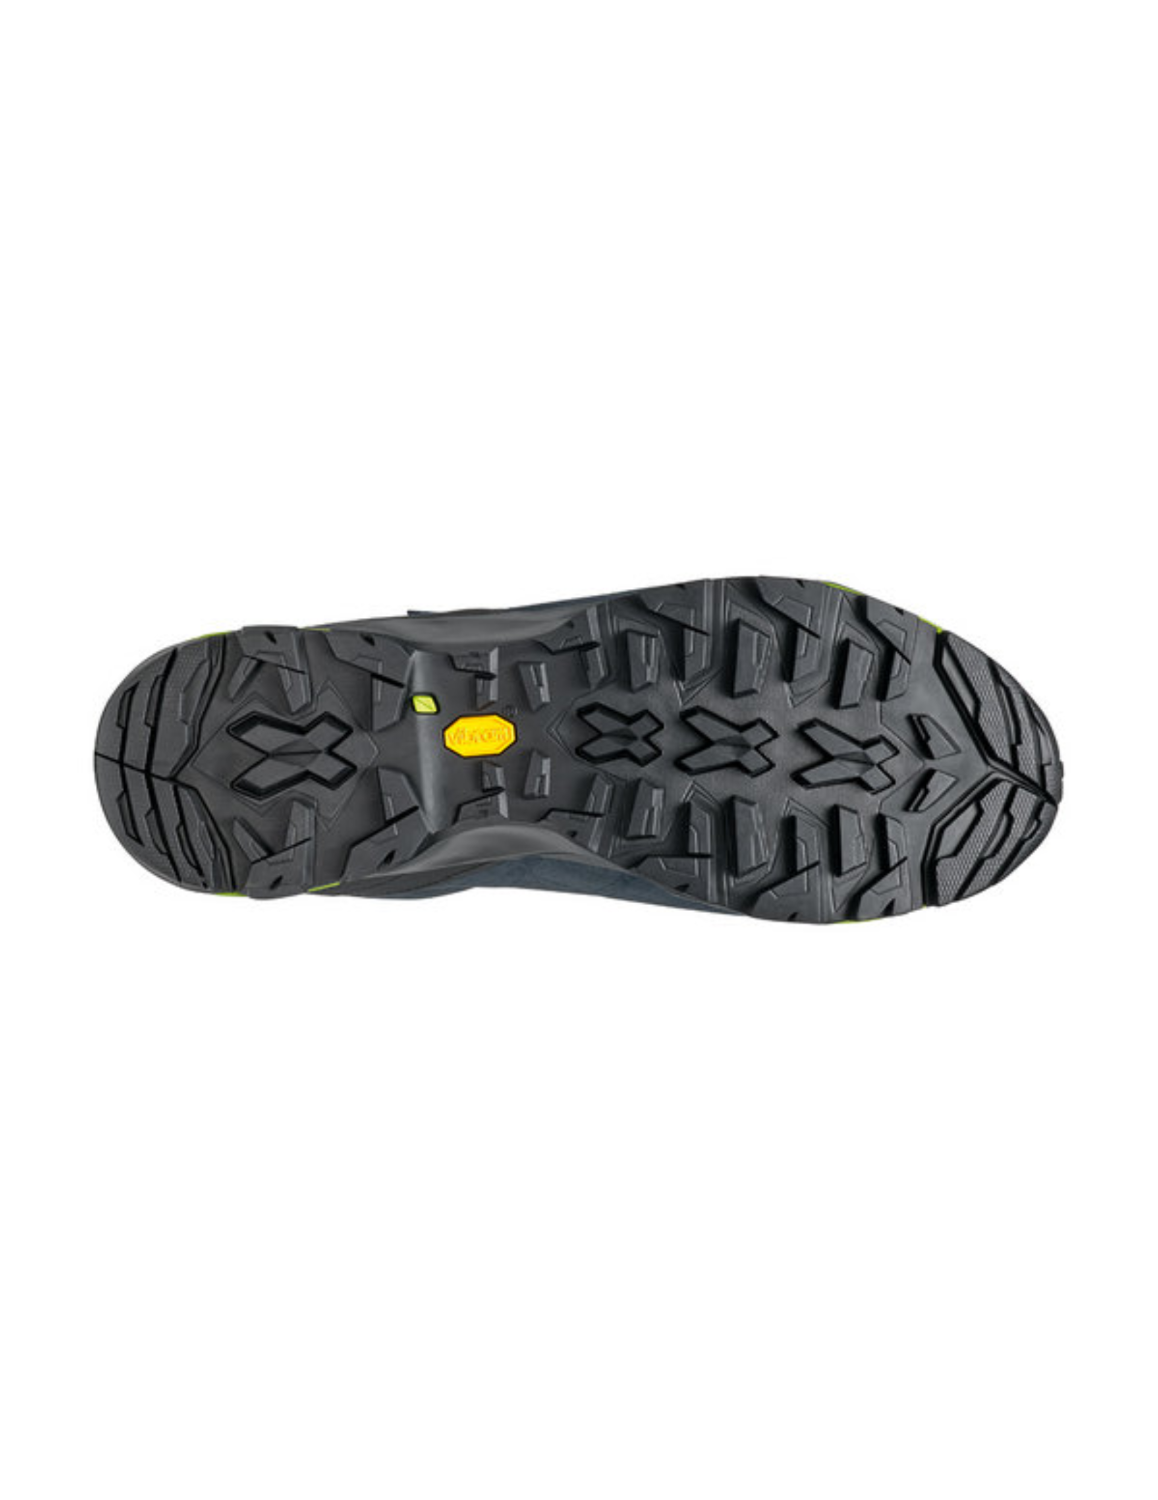 Chaussures de Rando Scarpa ZG Trek GTX Homme